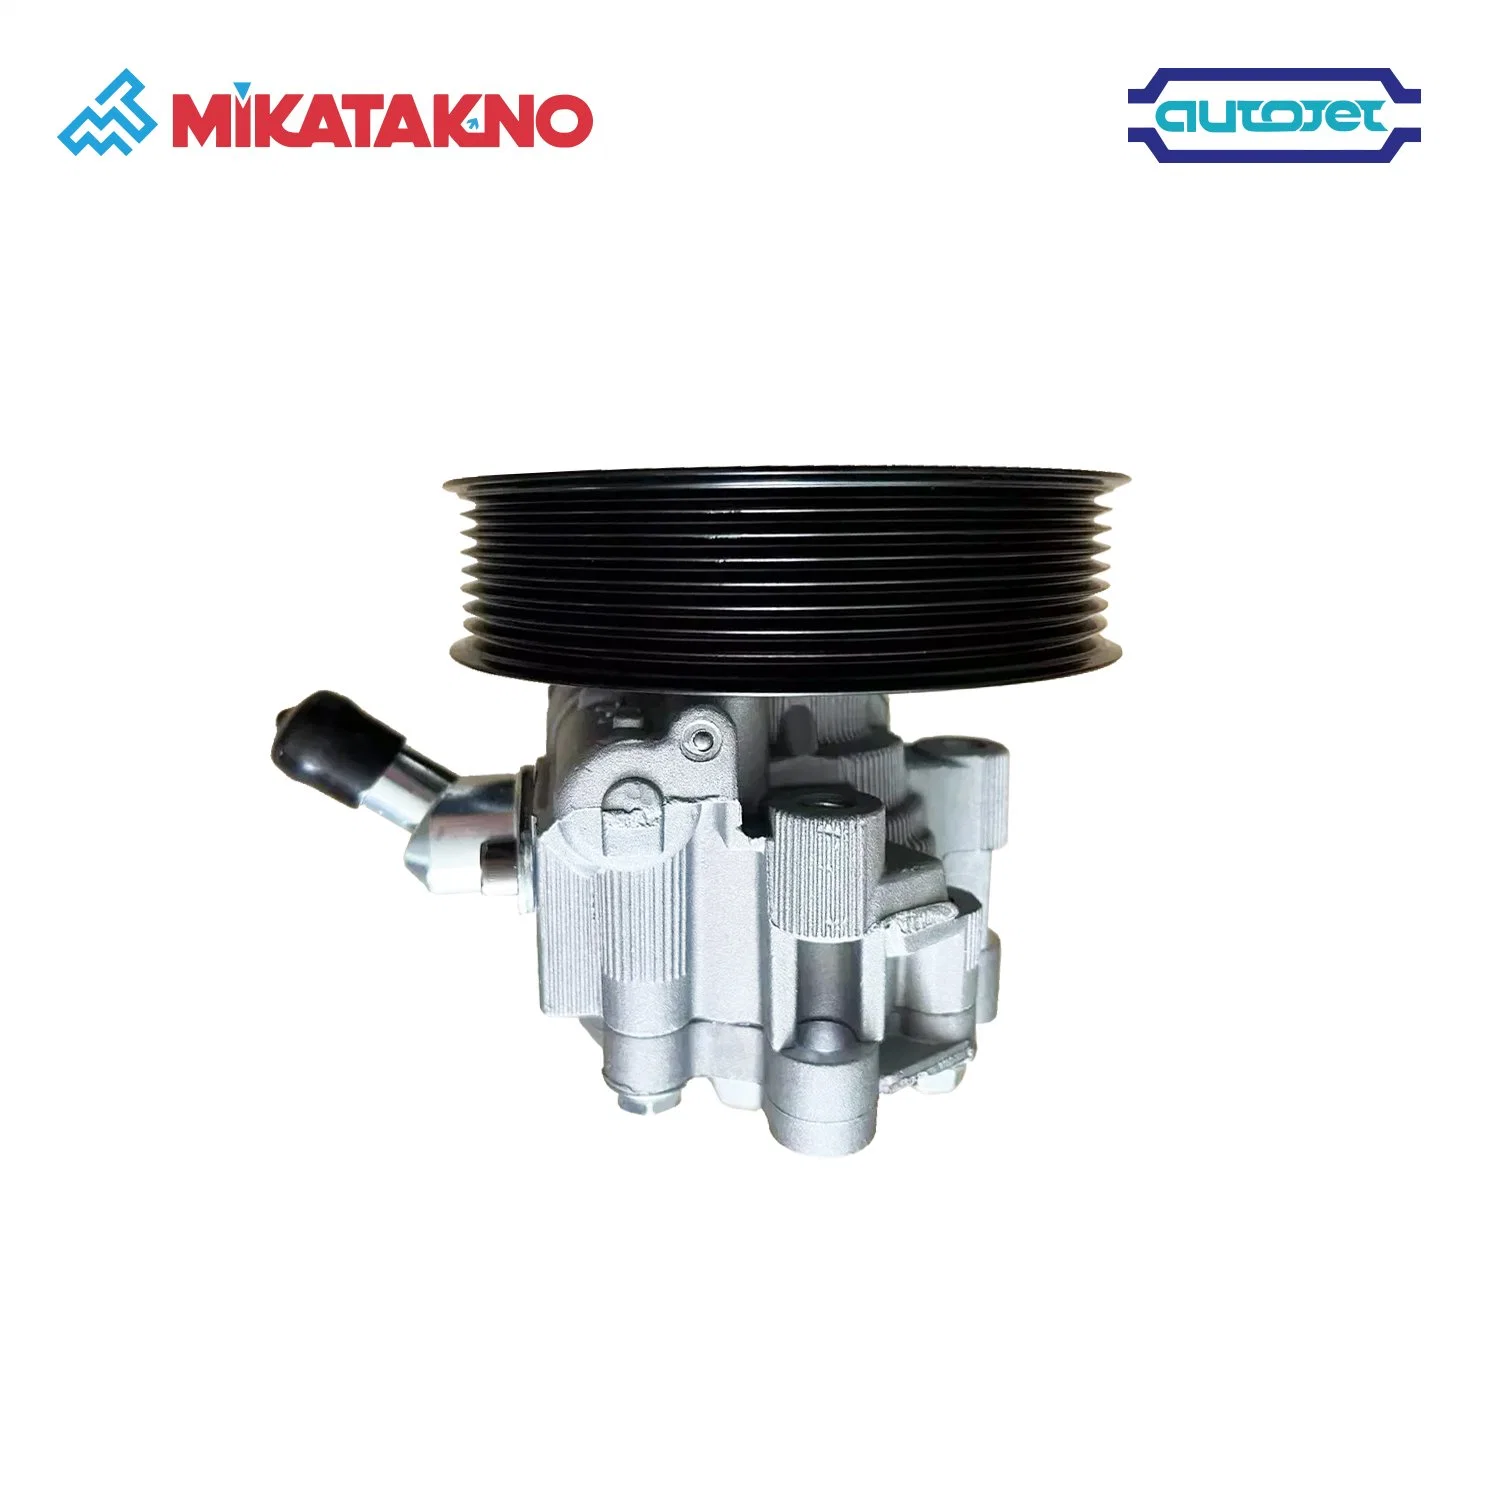 for Toyota Land Cruiser Uzj200 Auto Steering System -44310-60520 Factory Price Supplier of Power Steering Pump